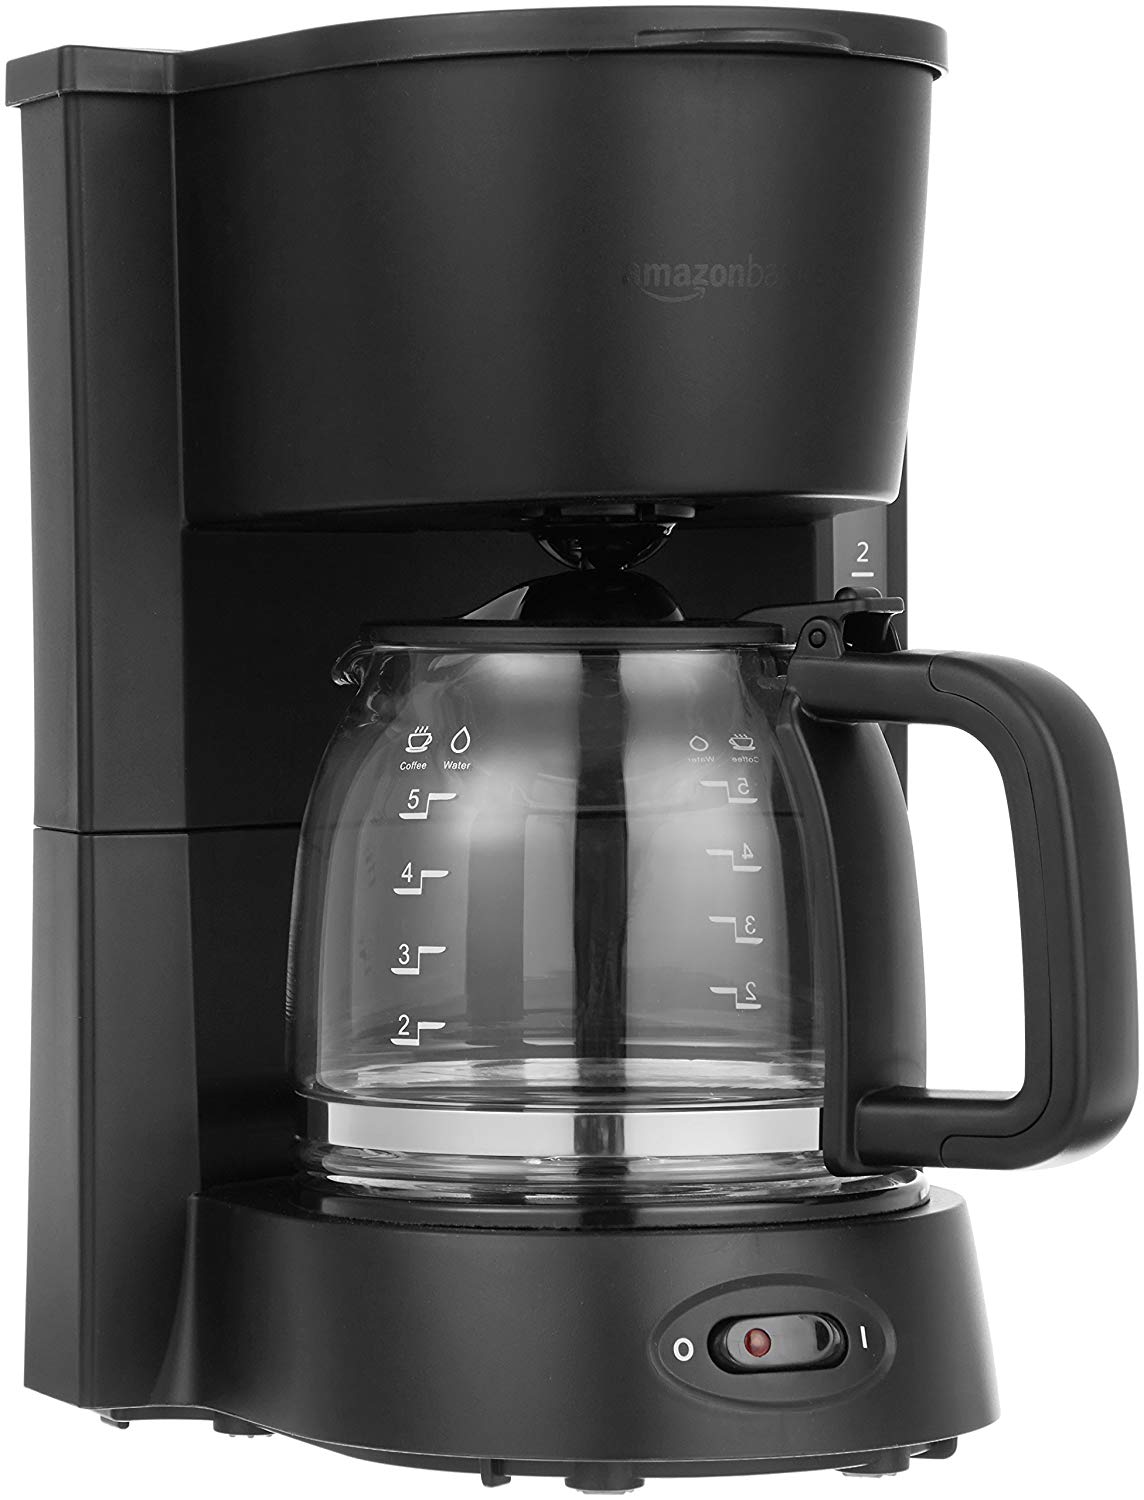 AmazonBasics 5 Cup Coffee Maker